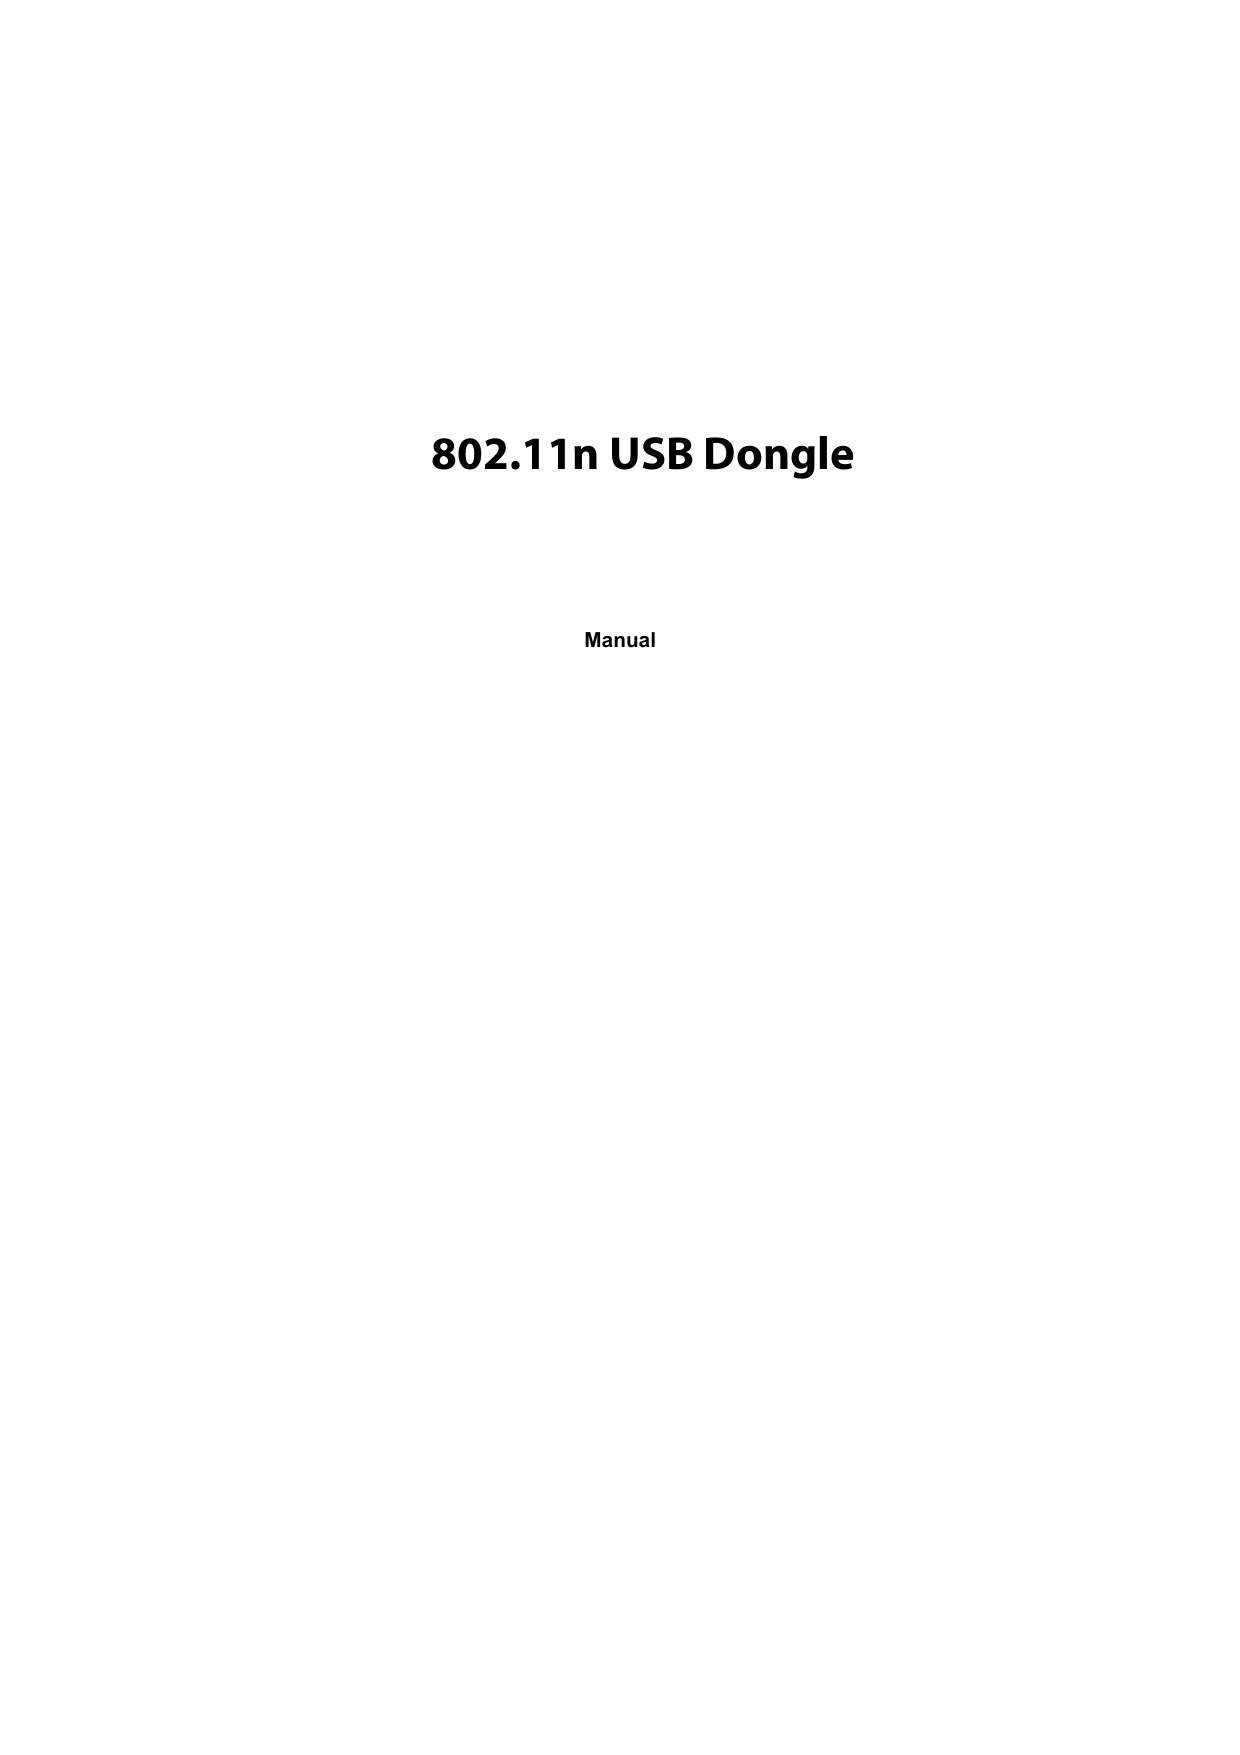 802.11n Wireless USB AdapterManual802.11n USB Dongle